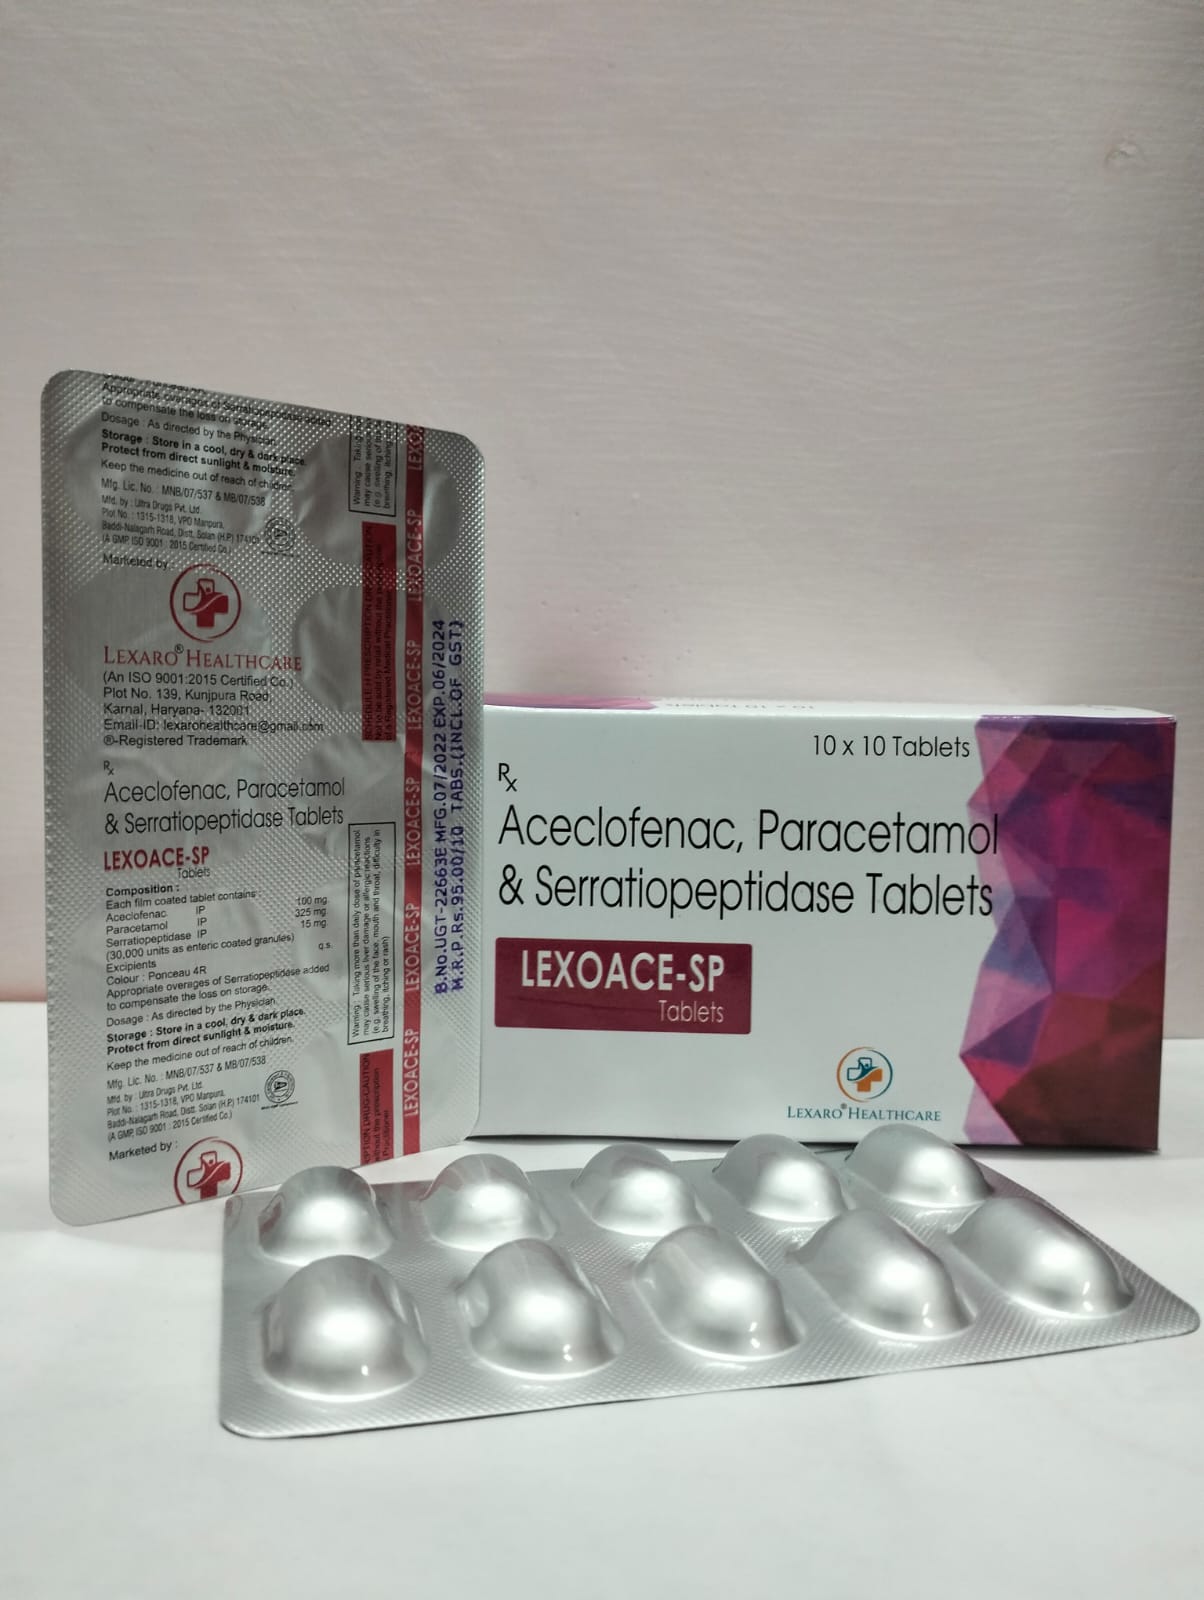 aceclofenac 100mg+ paracetamol 325mg +
serratiopeptidase 15mg